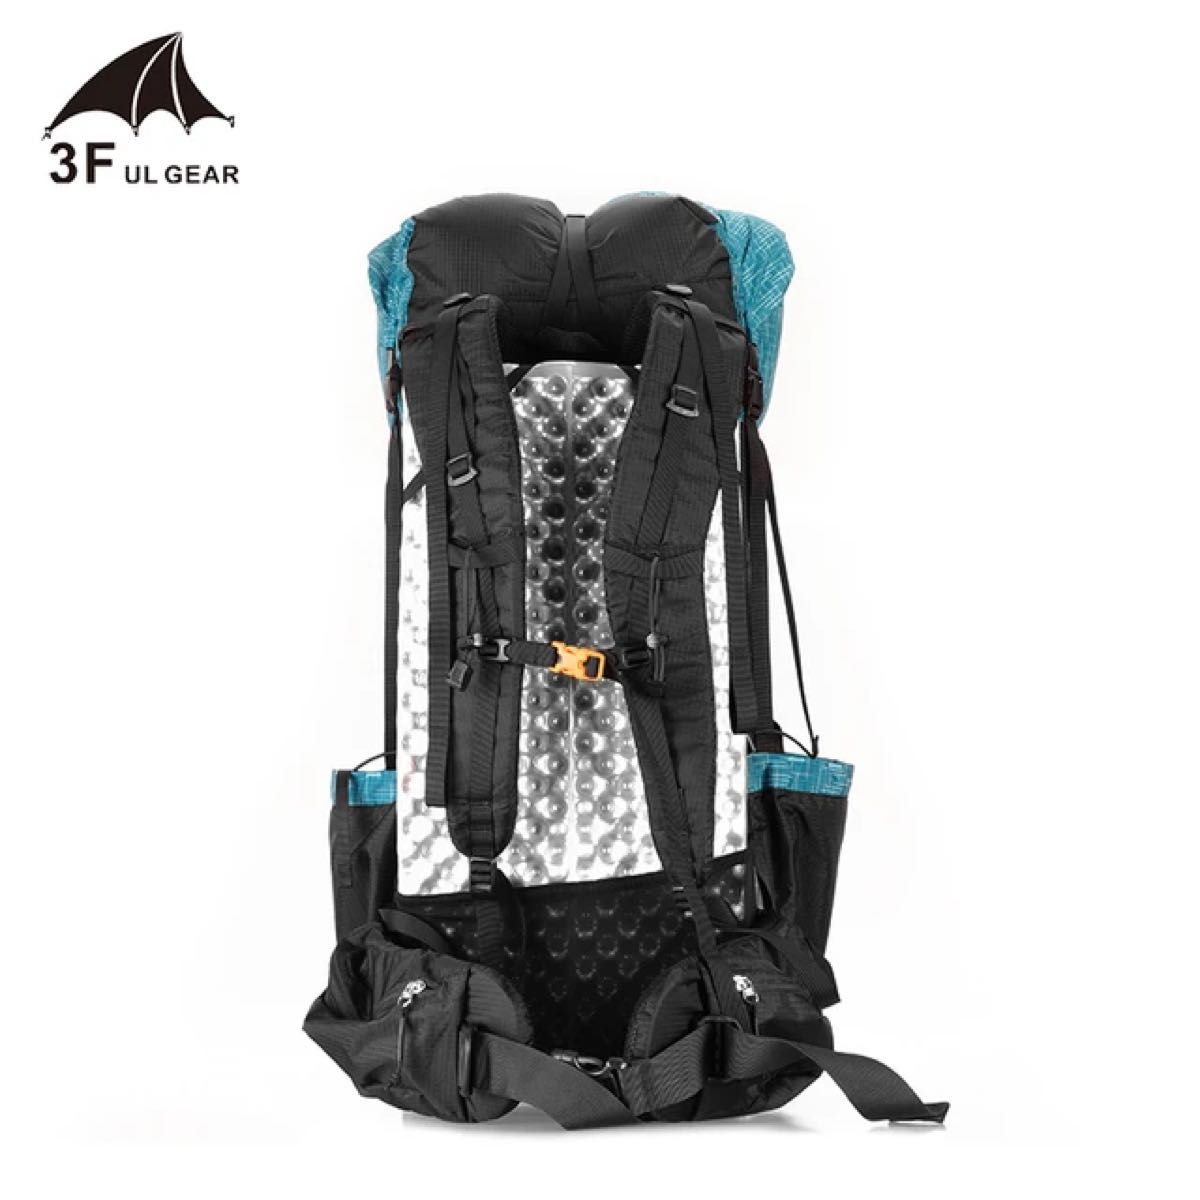 3F UL GEAR 40+16L Ultralight バックパック 新品 Water-resistant Backpack